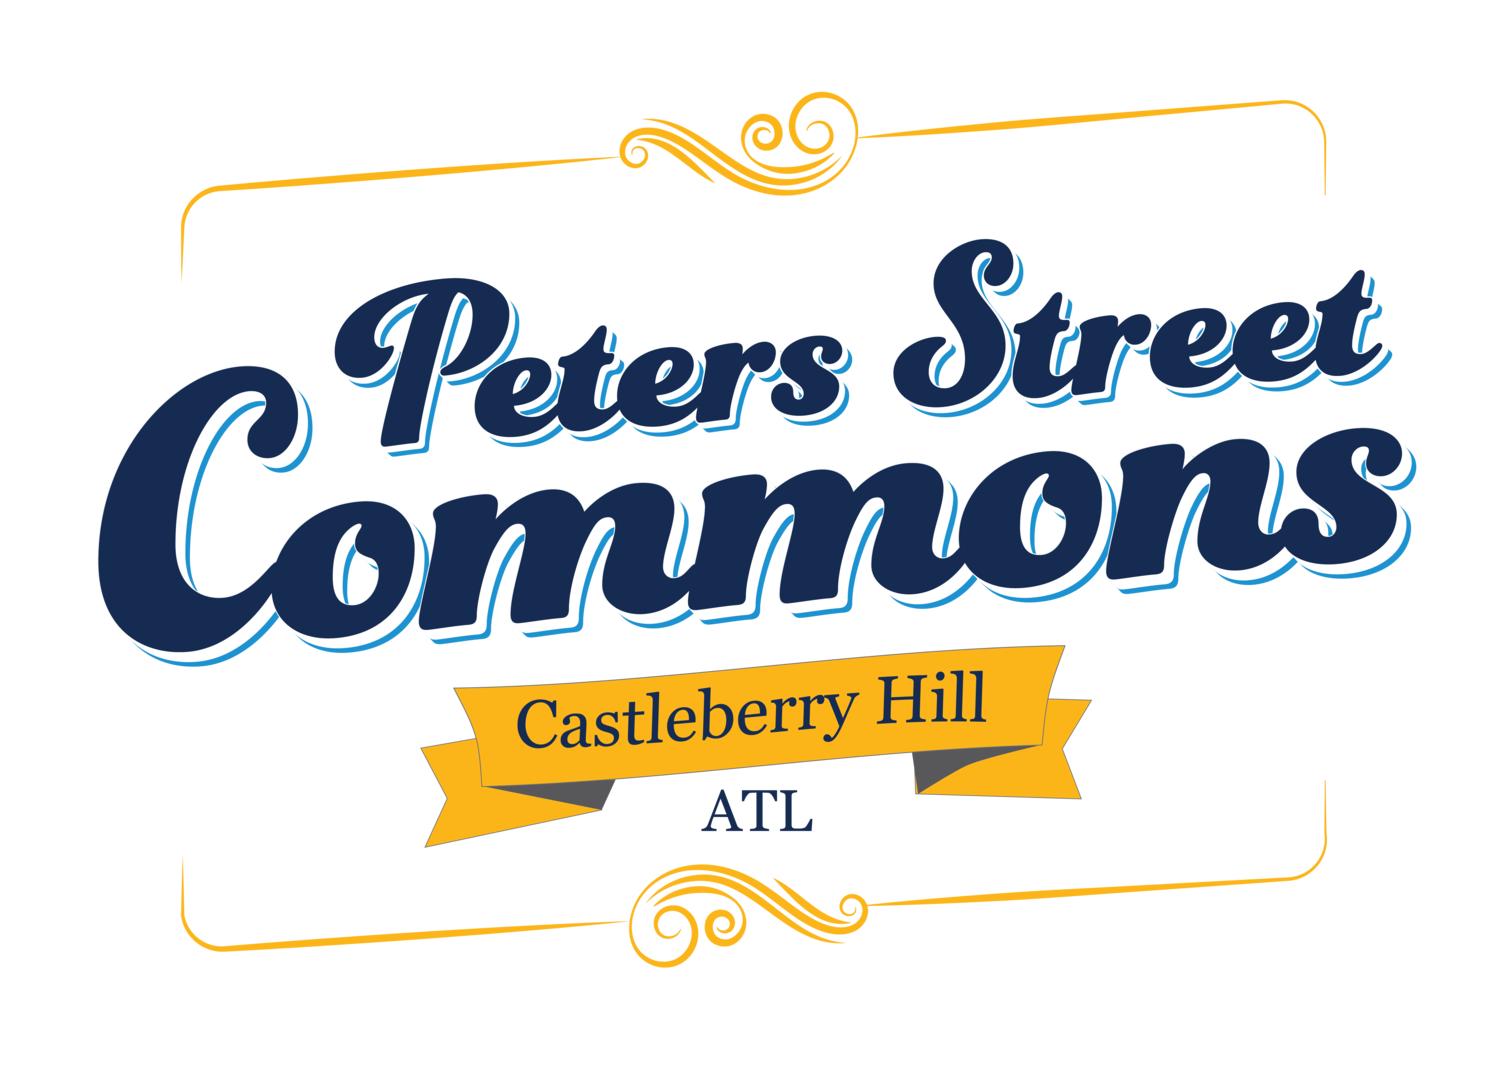 Peters Street Commons